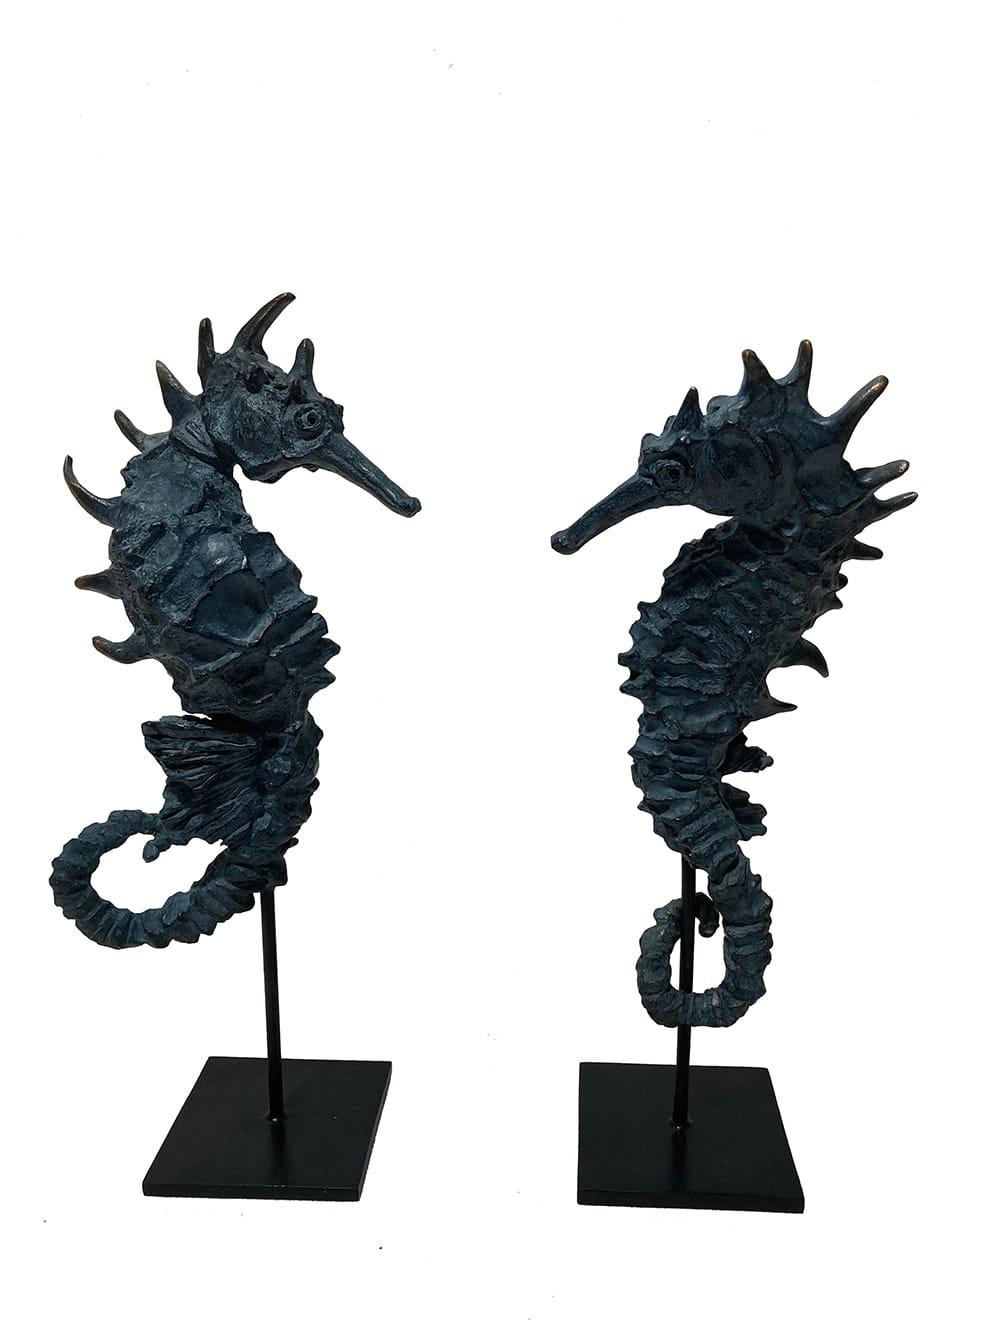 Ultramarine Seahorse II by Chésade - Bronze sculpture, animal art, sealife For Sale 2